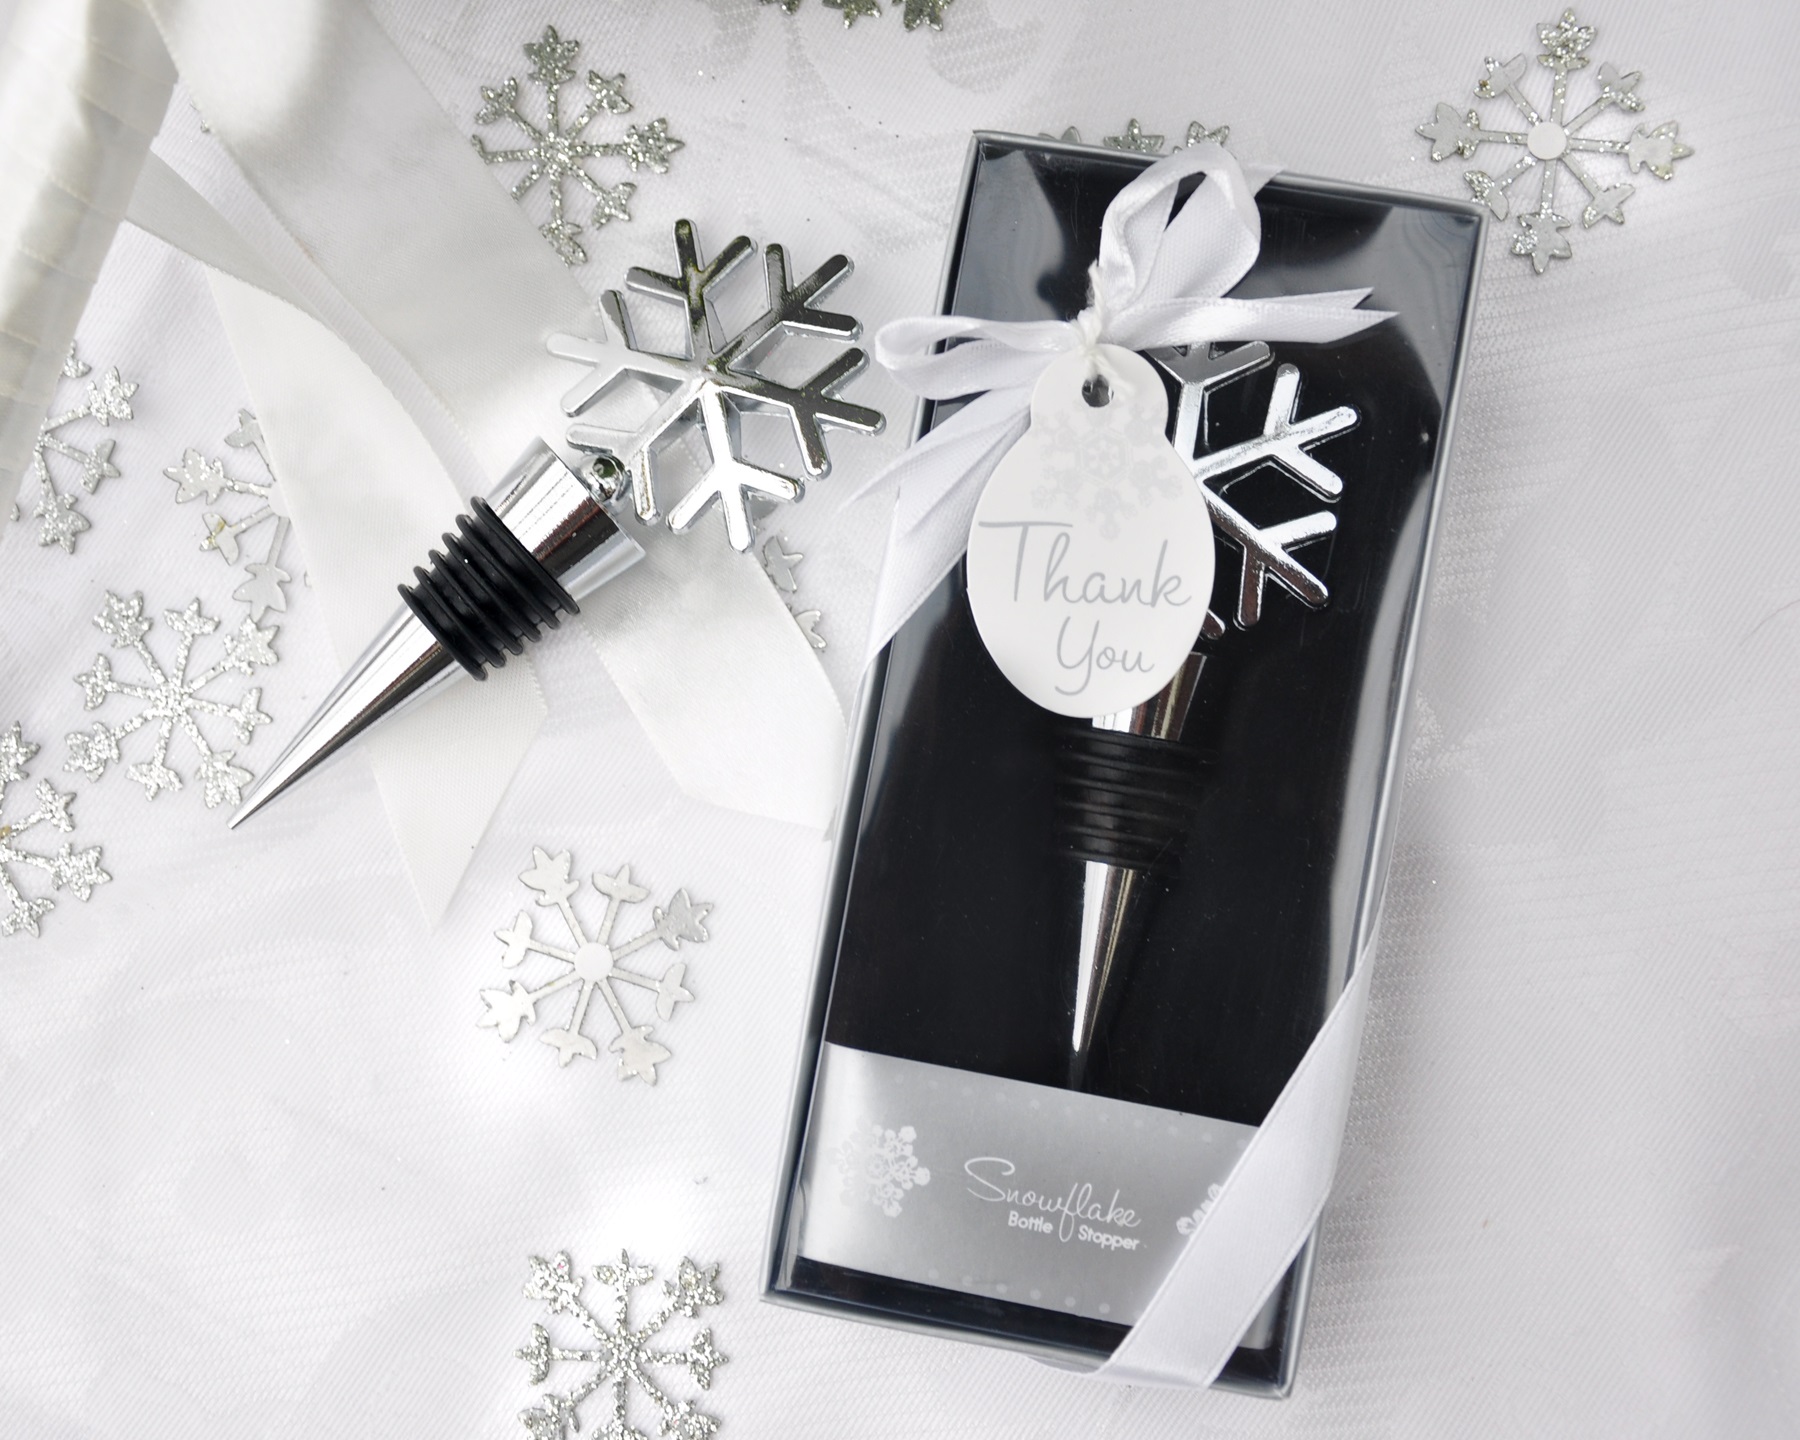 Snowflake Bottle Stopper in Seasonal Gift Box [Case Pack of 100]